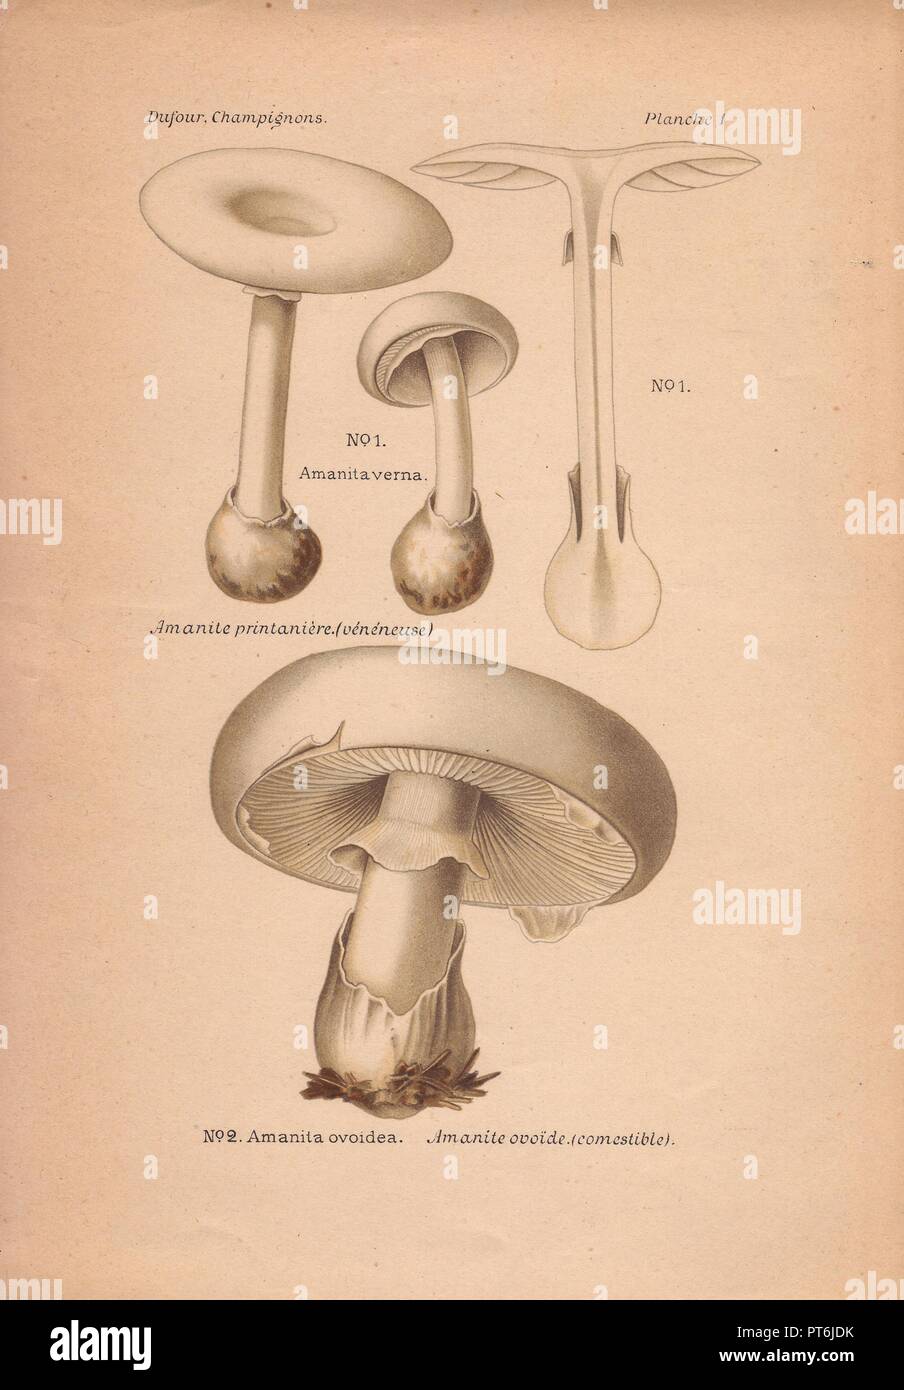 Poisonous fool's mushroom Amanita verna and edible European white egg mushroom Amanita ovoidea.. . Chromolithograph from Leon Dufour's 'Atlas des Champignons Comestibles et Veneneux' (1891). Stock Photo